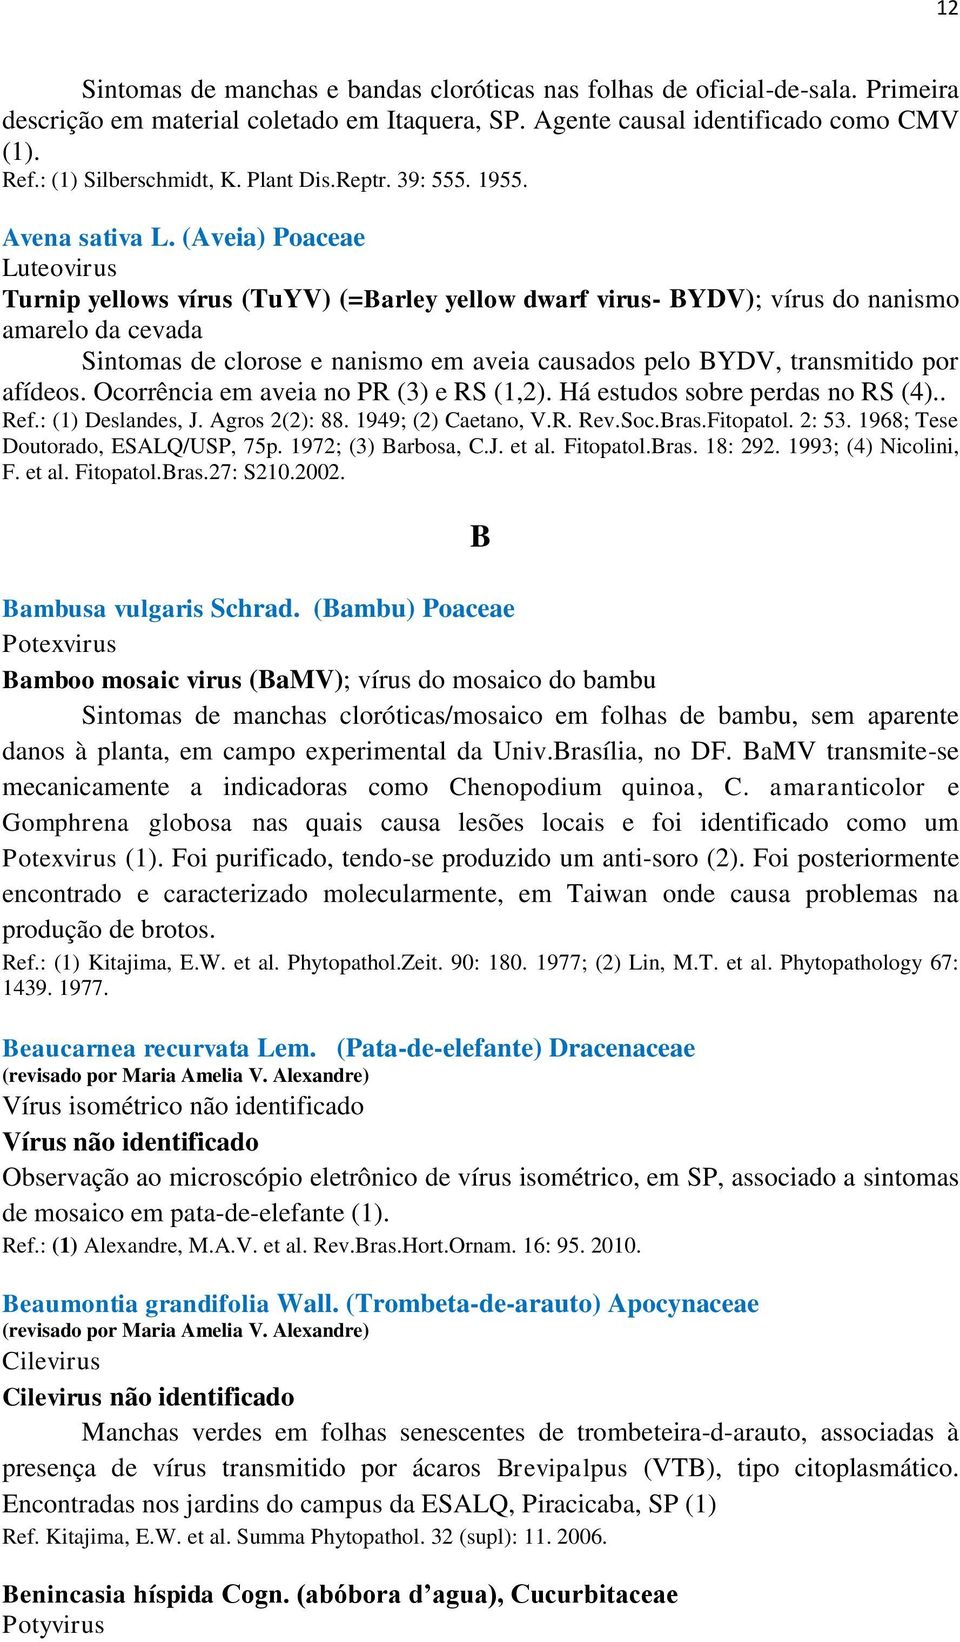 (Aveia) Poaceae Luteovirus Turnip yellows vírus (TuYV) (=Barley yellow dwarf virus- BYDV); vírus do nanismo amarelo da cevada Sintomas de clorose e nanismo em aveia causados pelo BYDV, transmitido